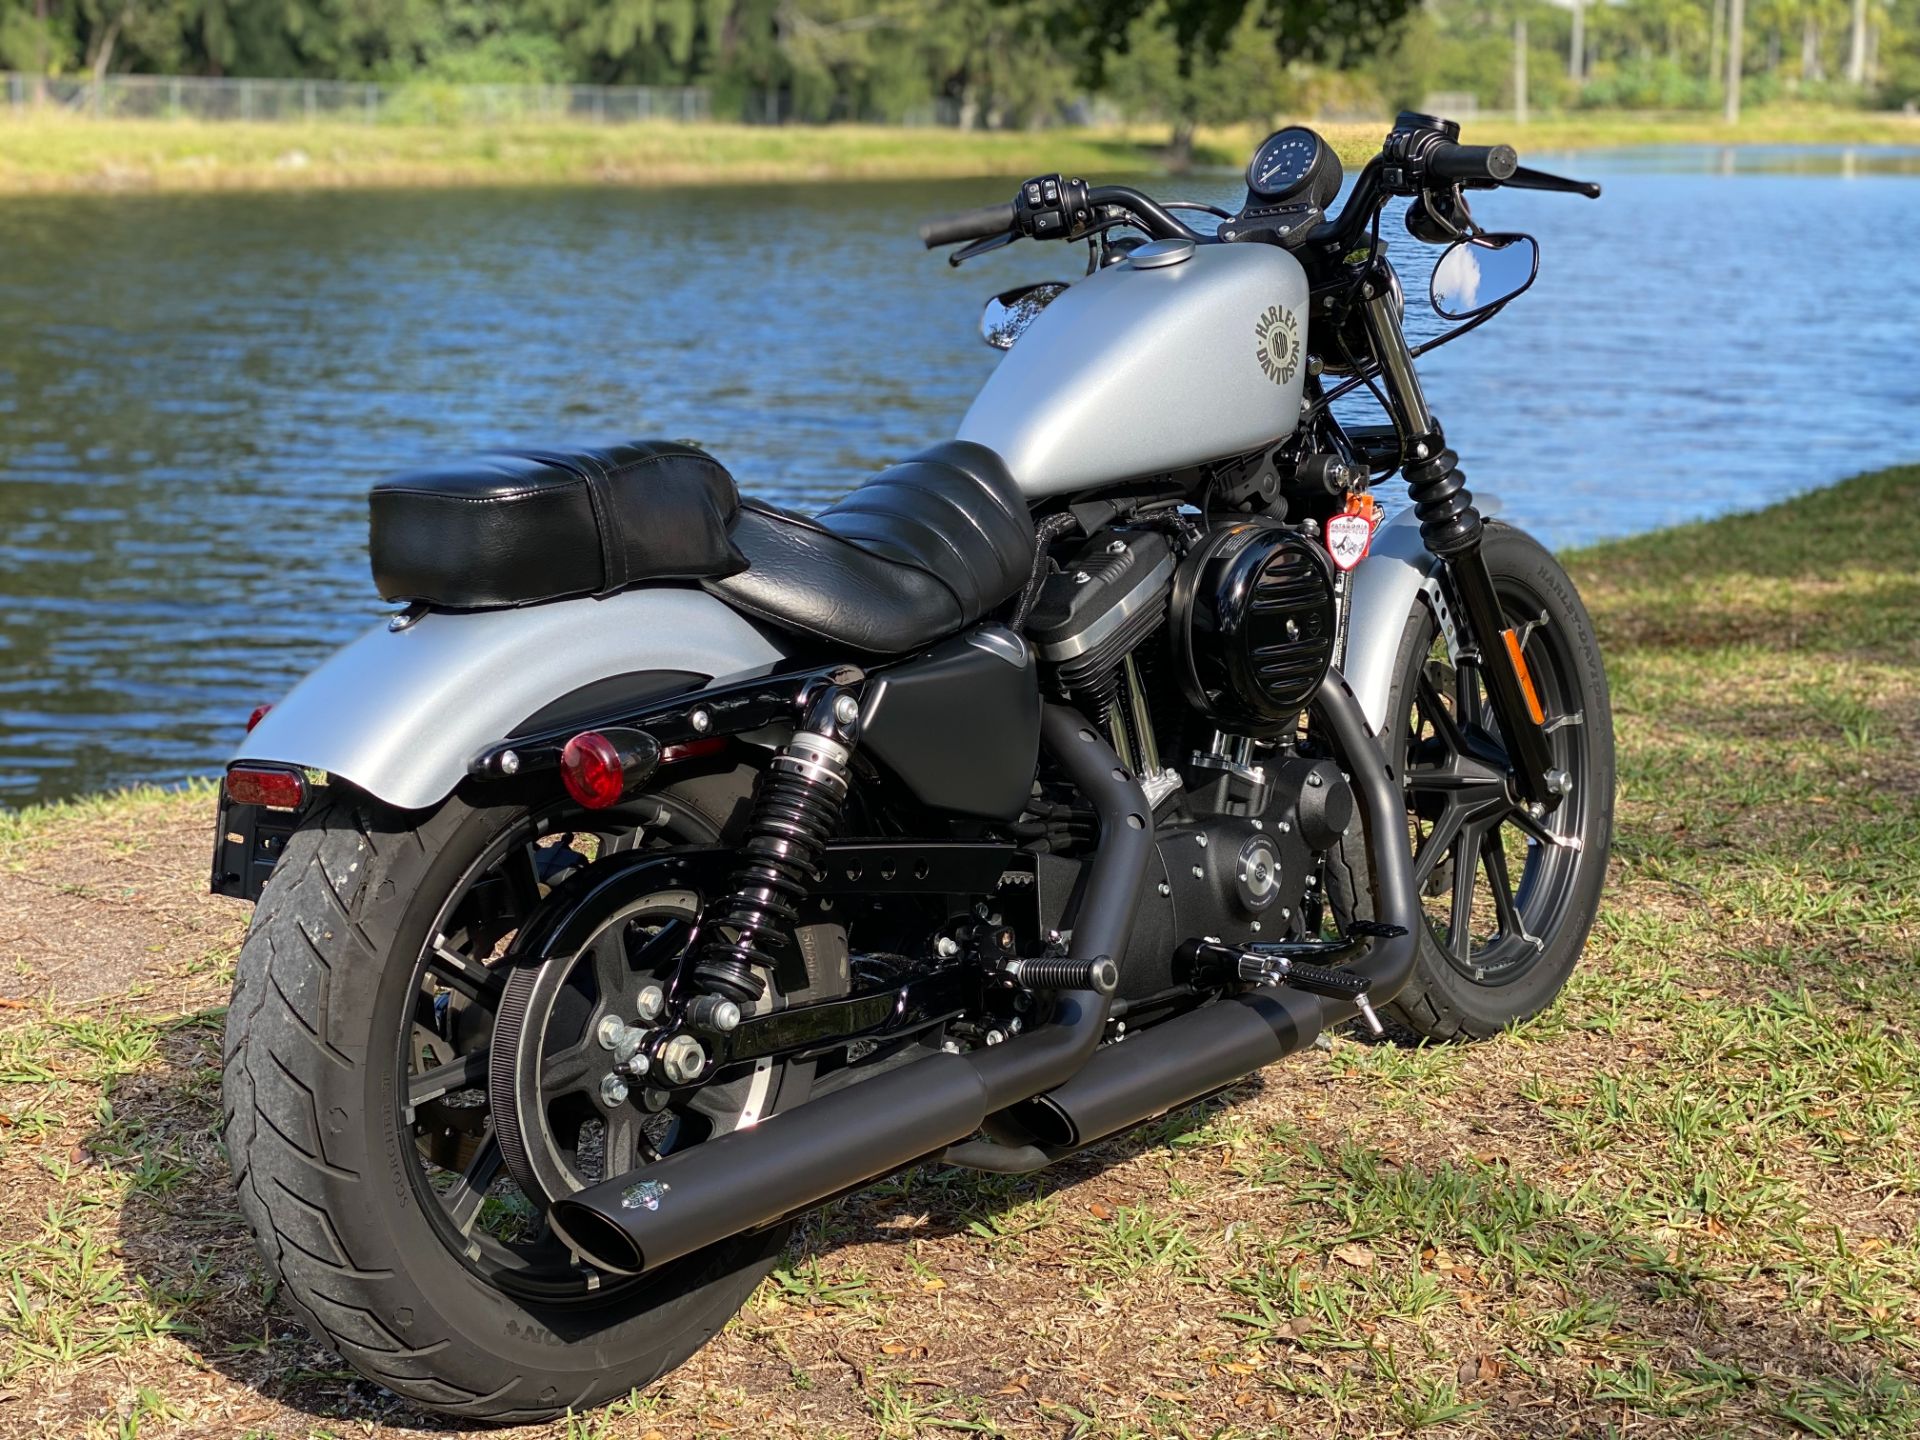 2020 Harley-Davidson Iron 883™ in North Miami Beach, Florida - Photo 9